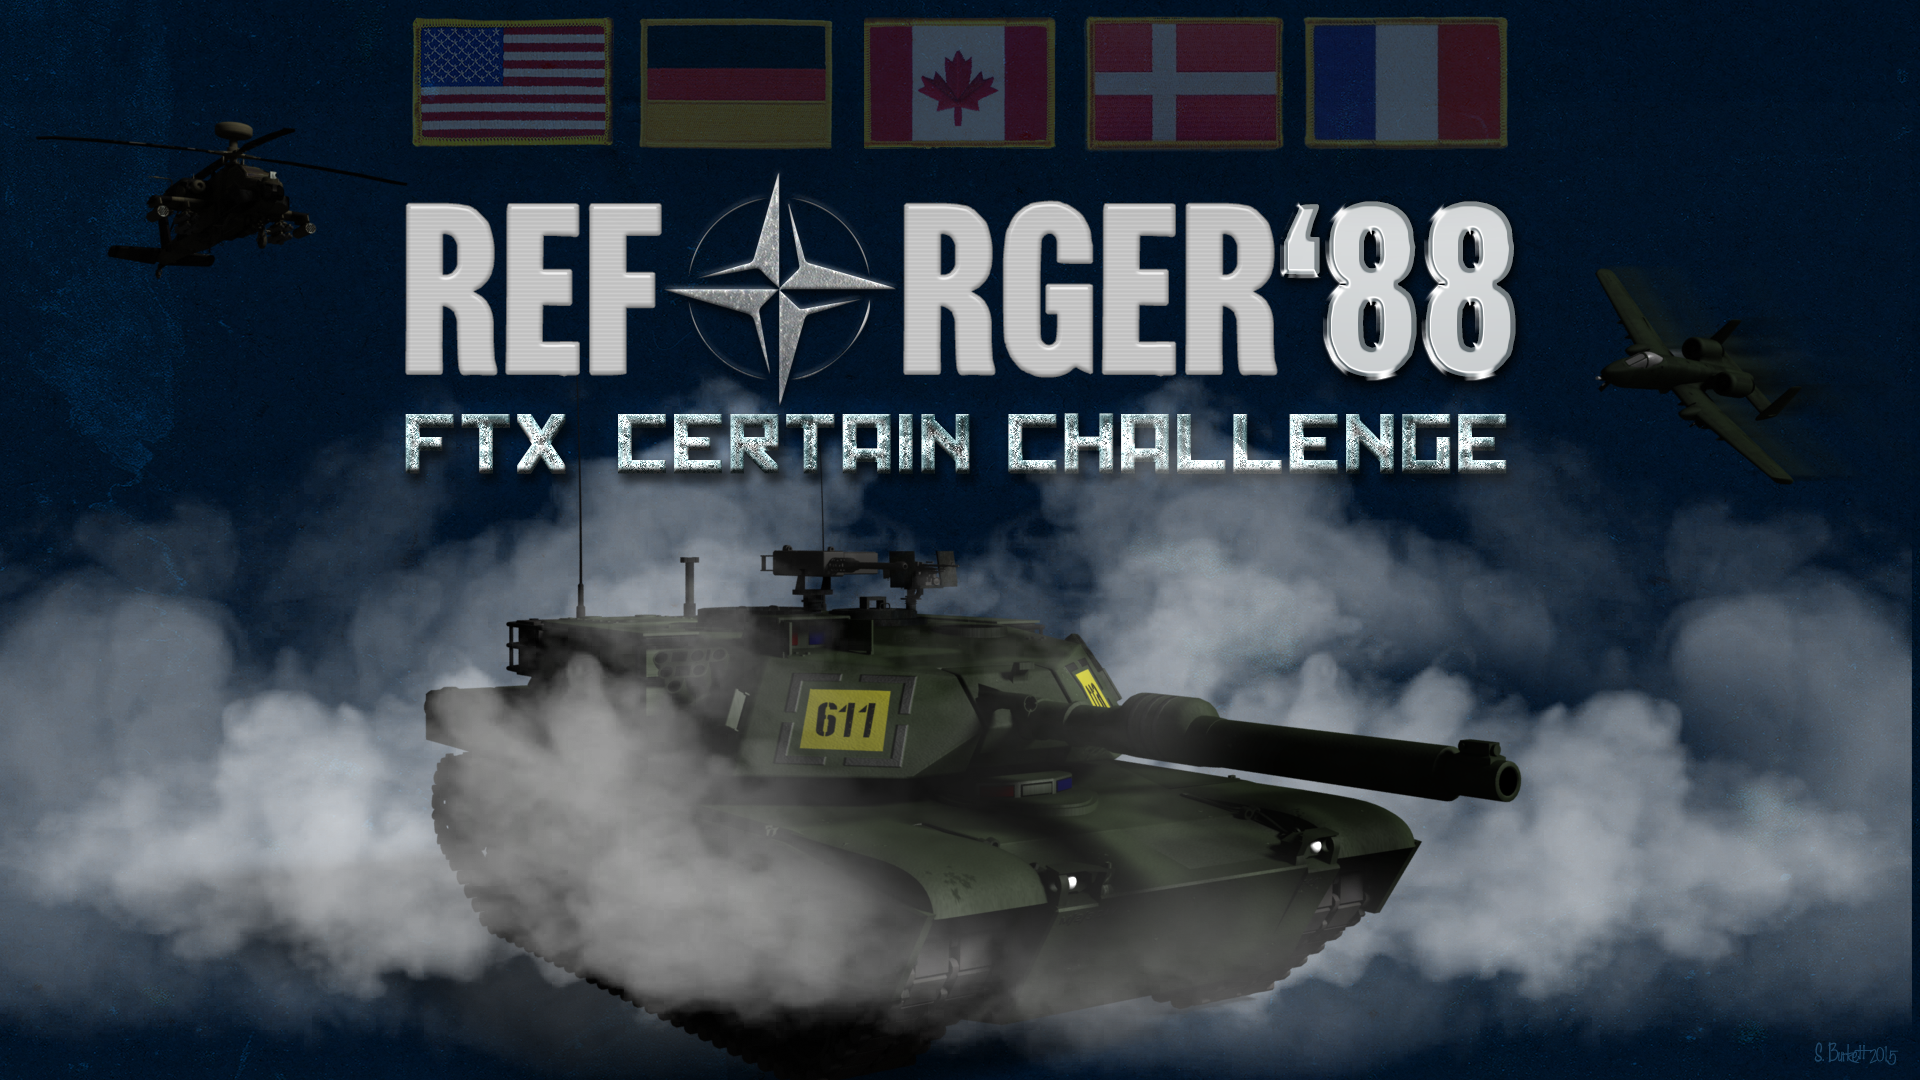 U.S. Army - REFORGER - Certain Challenge